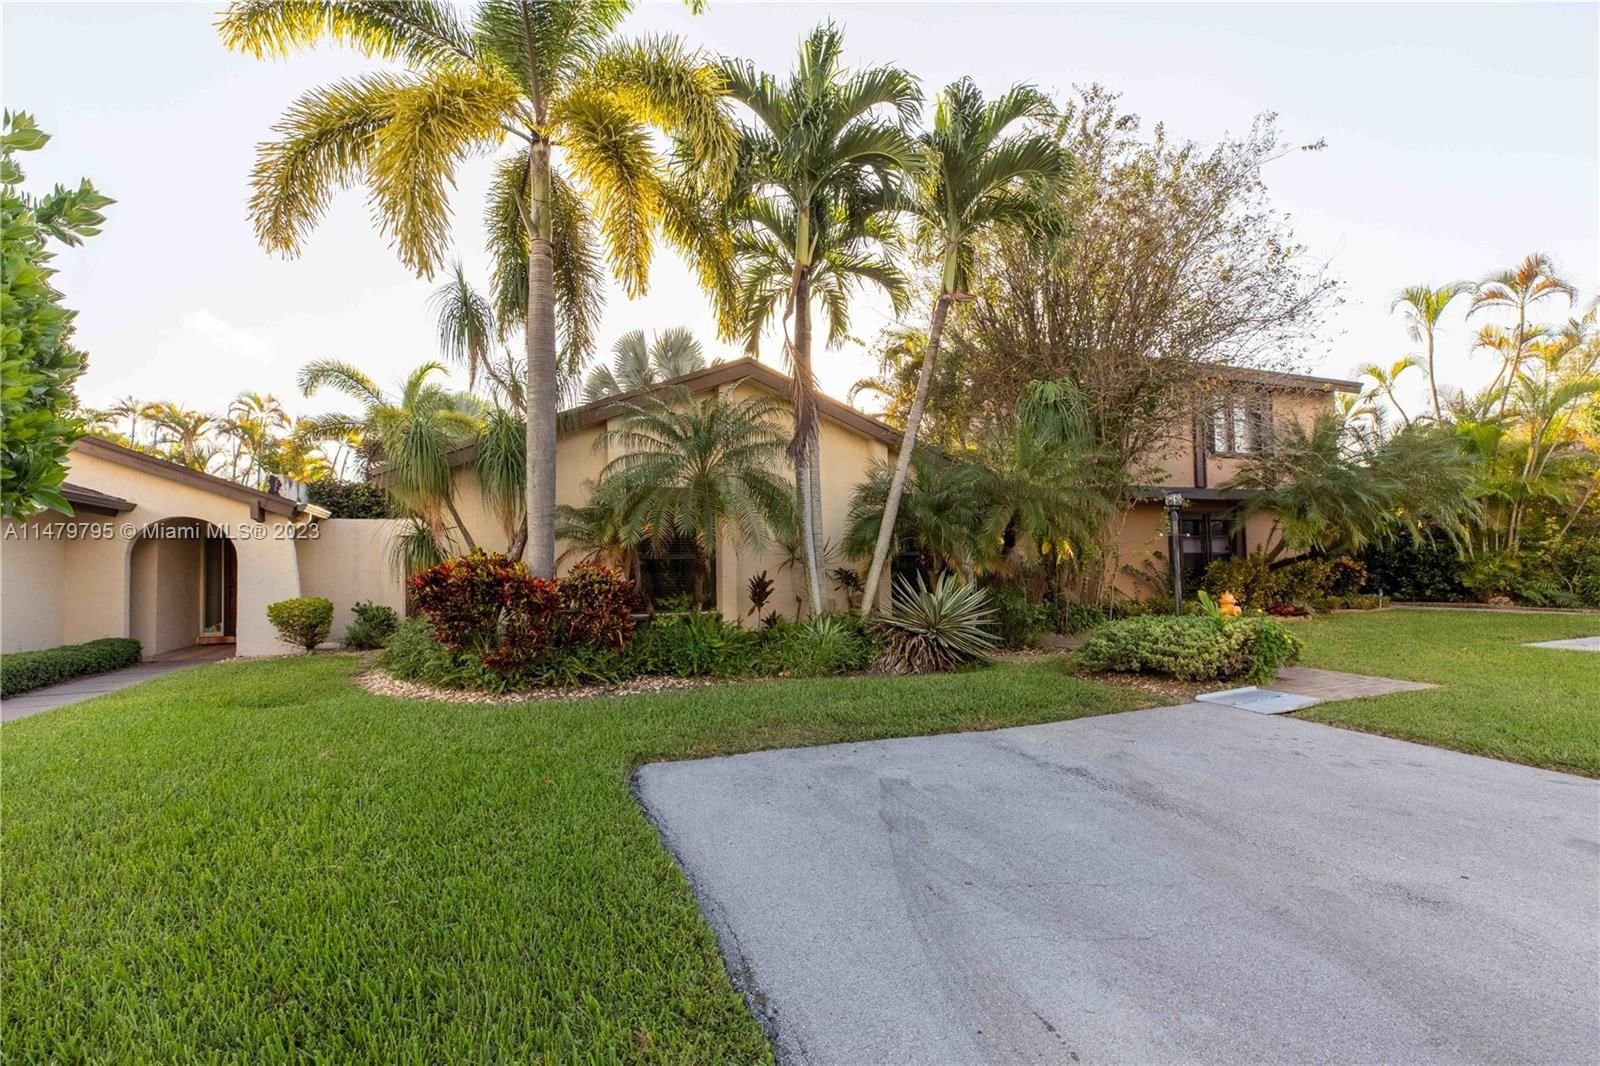 Real estate property located at 13115 90th Ct, Miami-Dade County, Miami, FL